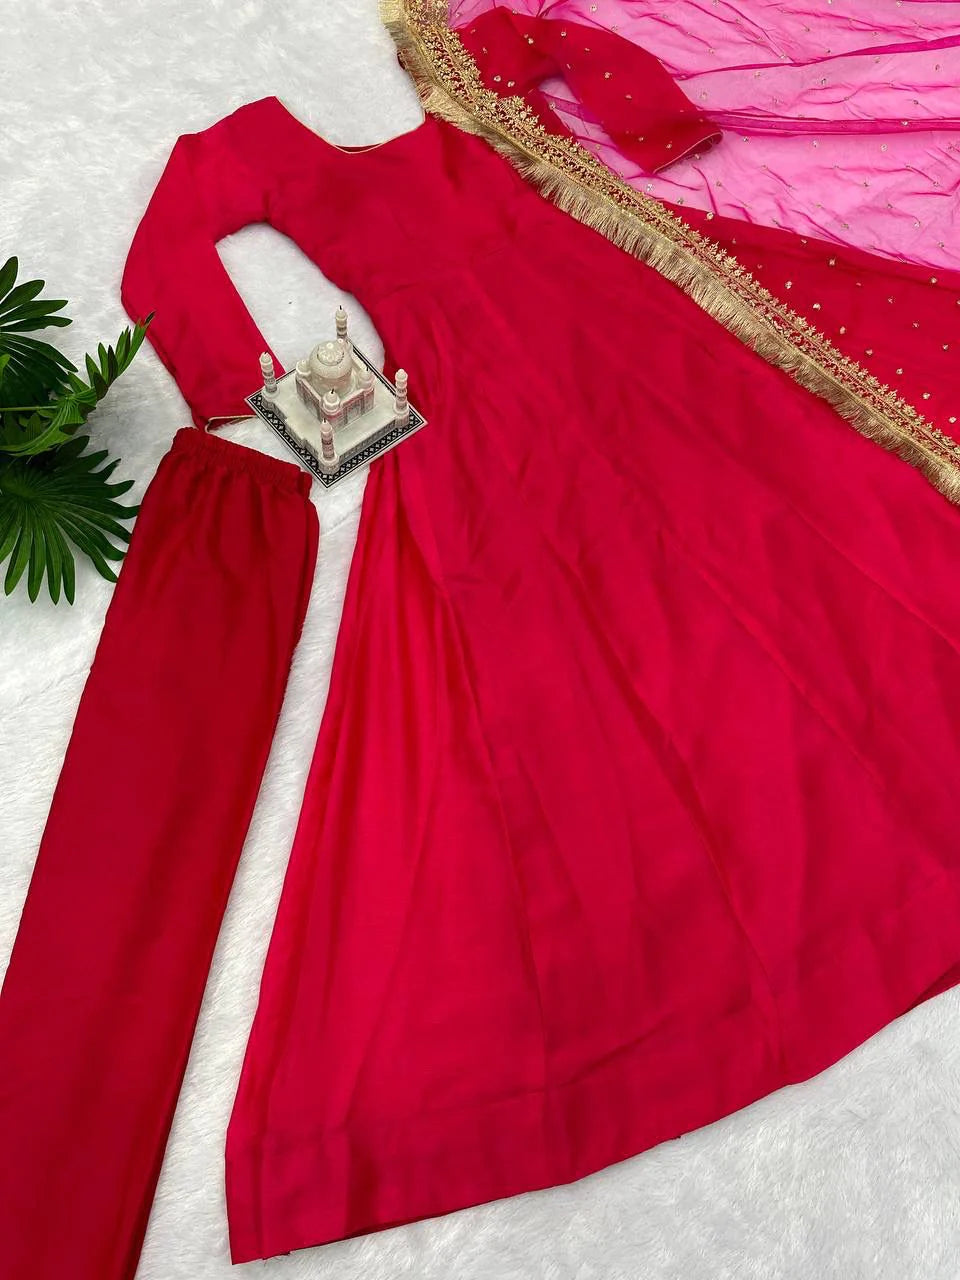 Elegant  Pink Color Plain Gown With Work Net Dupatta